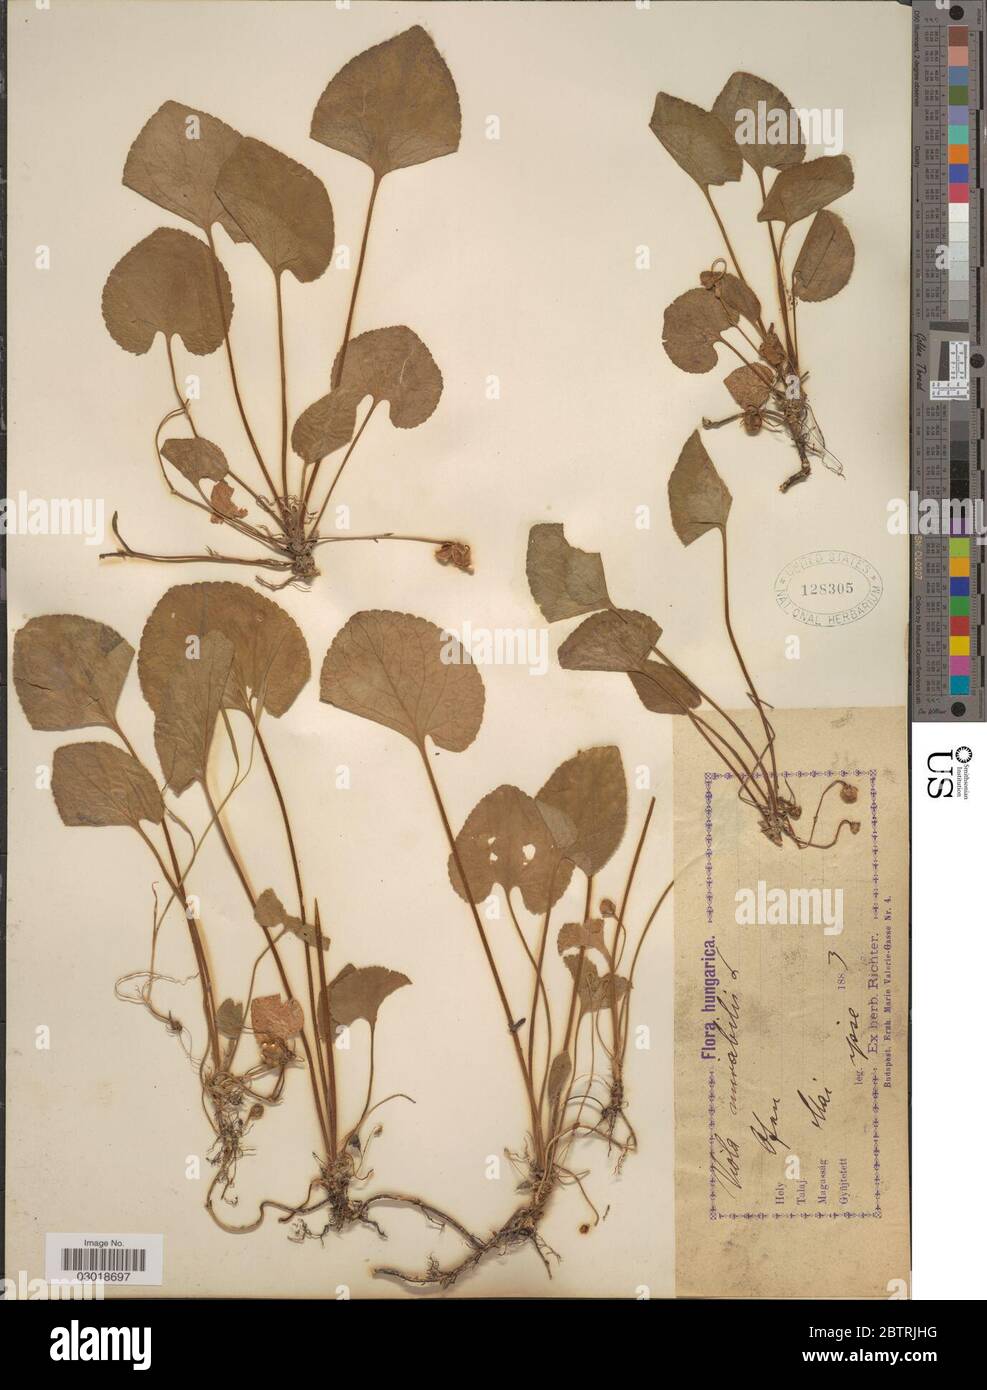 Viola mirabilis L. Stock Photo